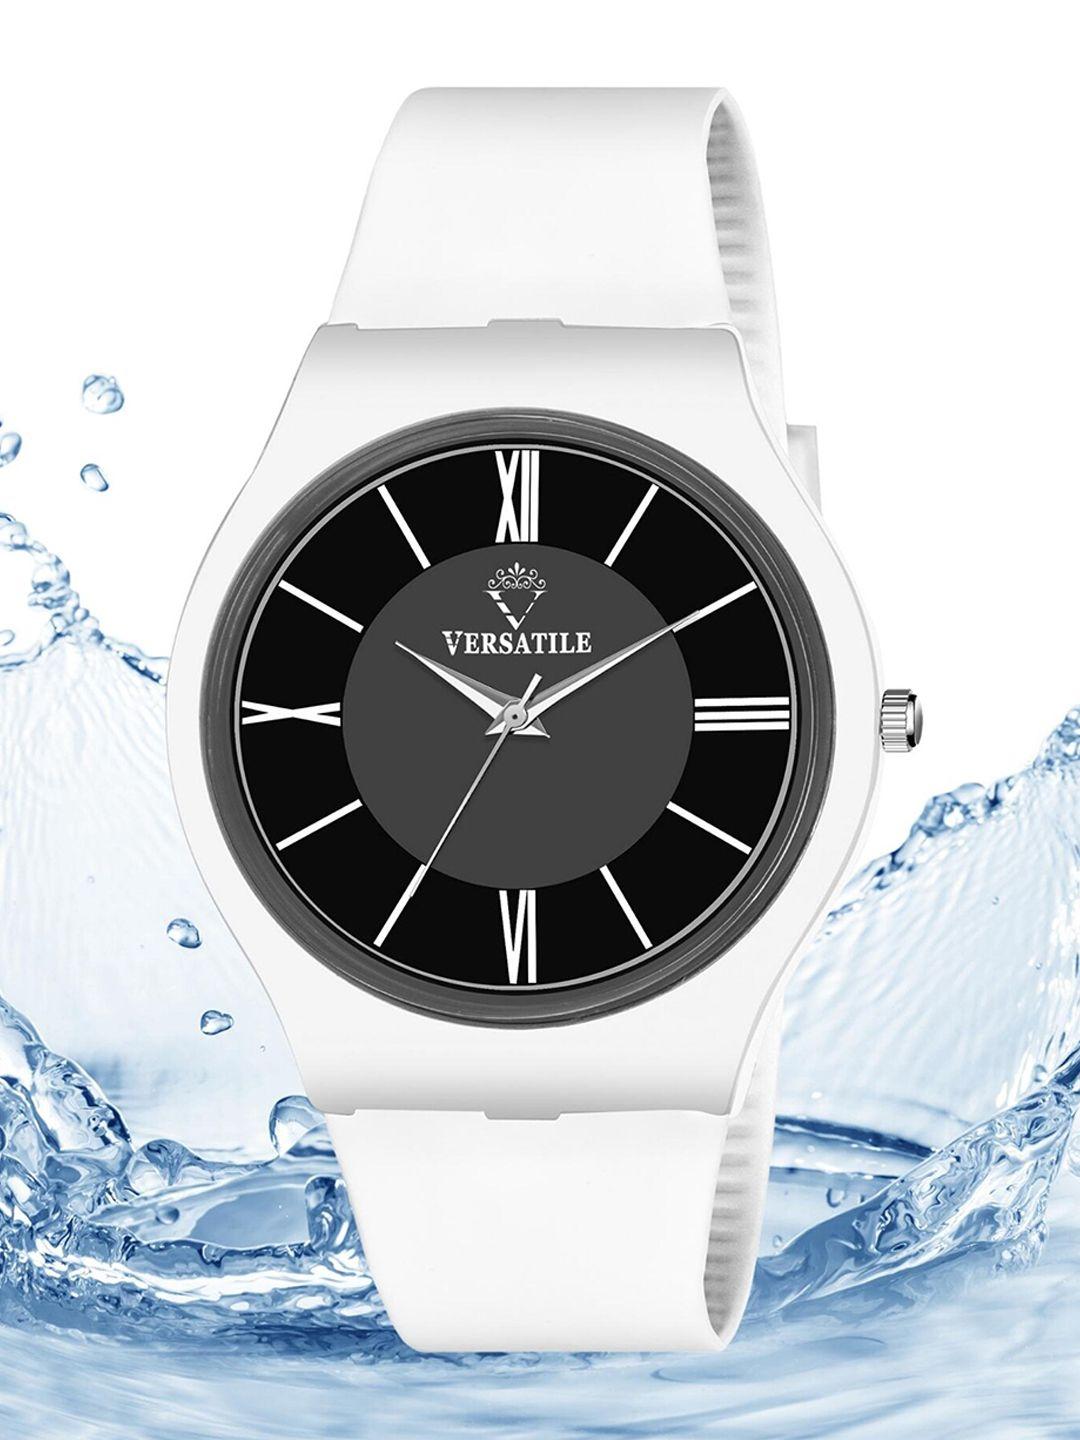 versatile men black brass dial & white leather straps analogue watch white waterproof